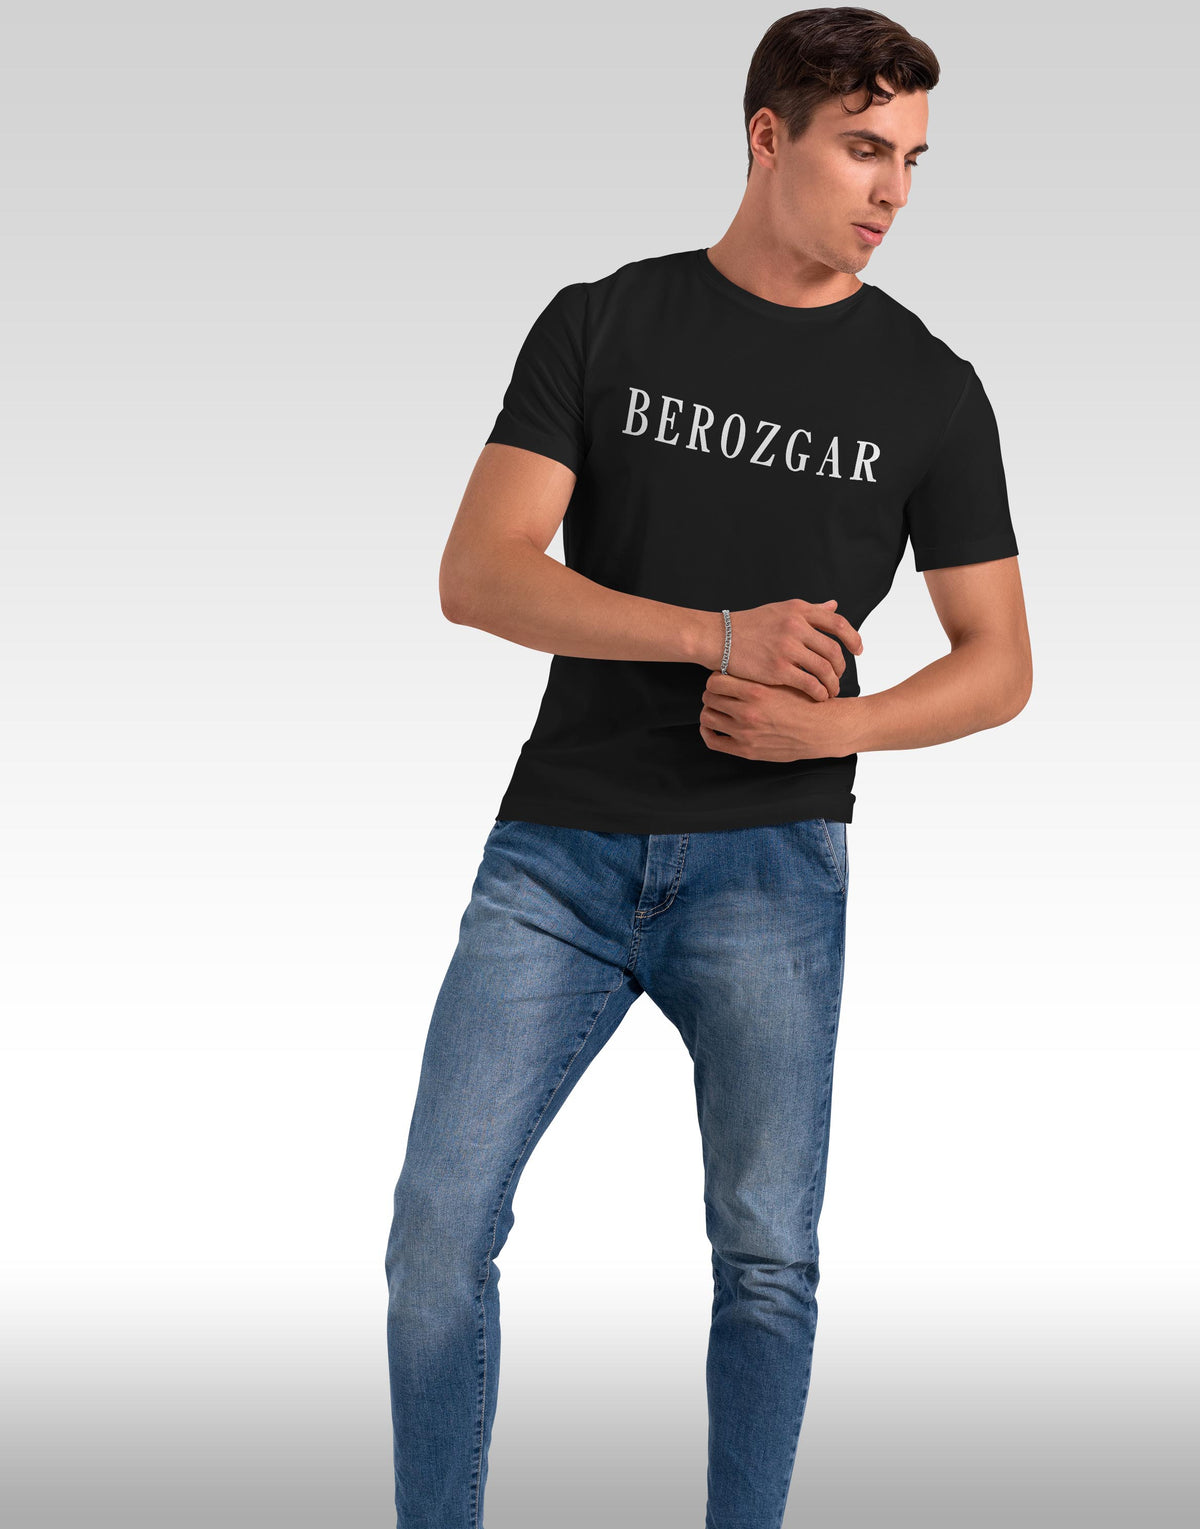 Men's black berozgar graphic printed tshirt